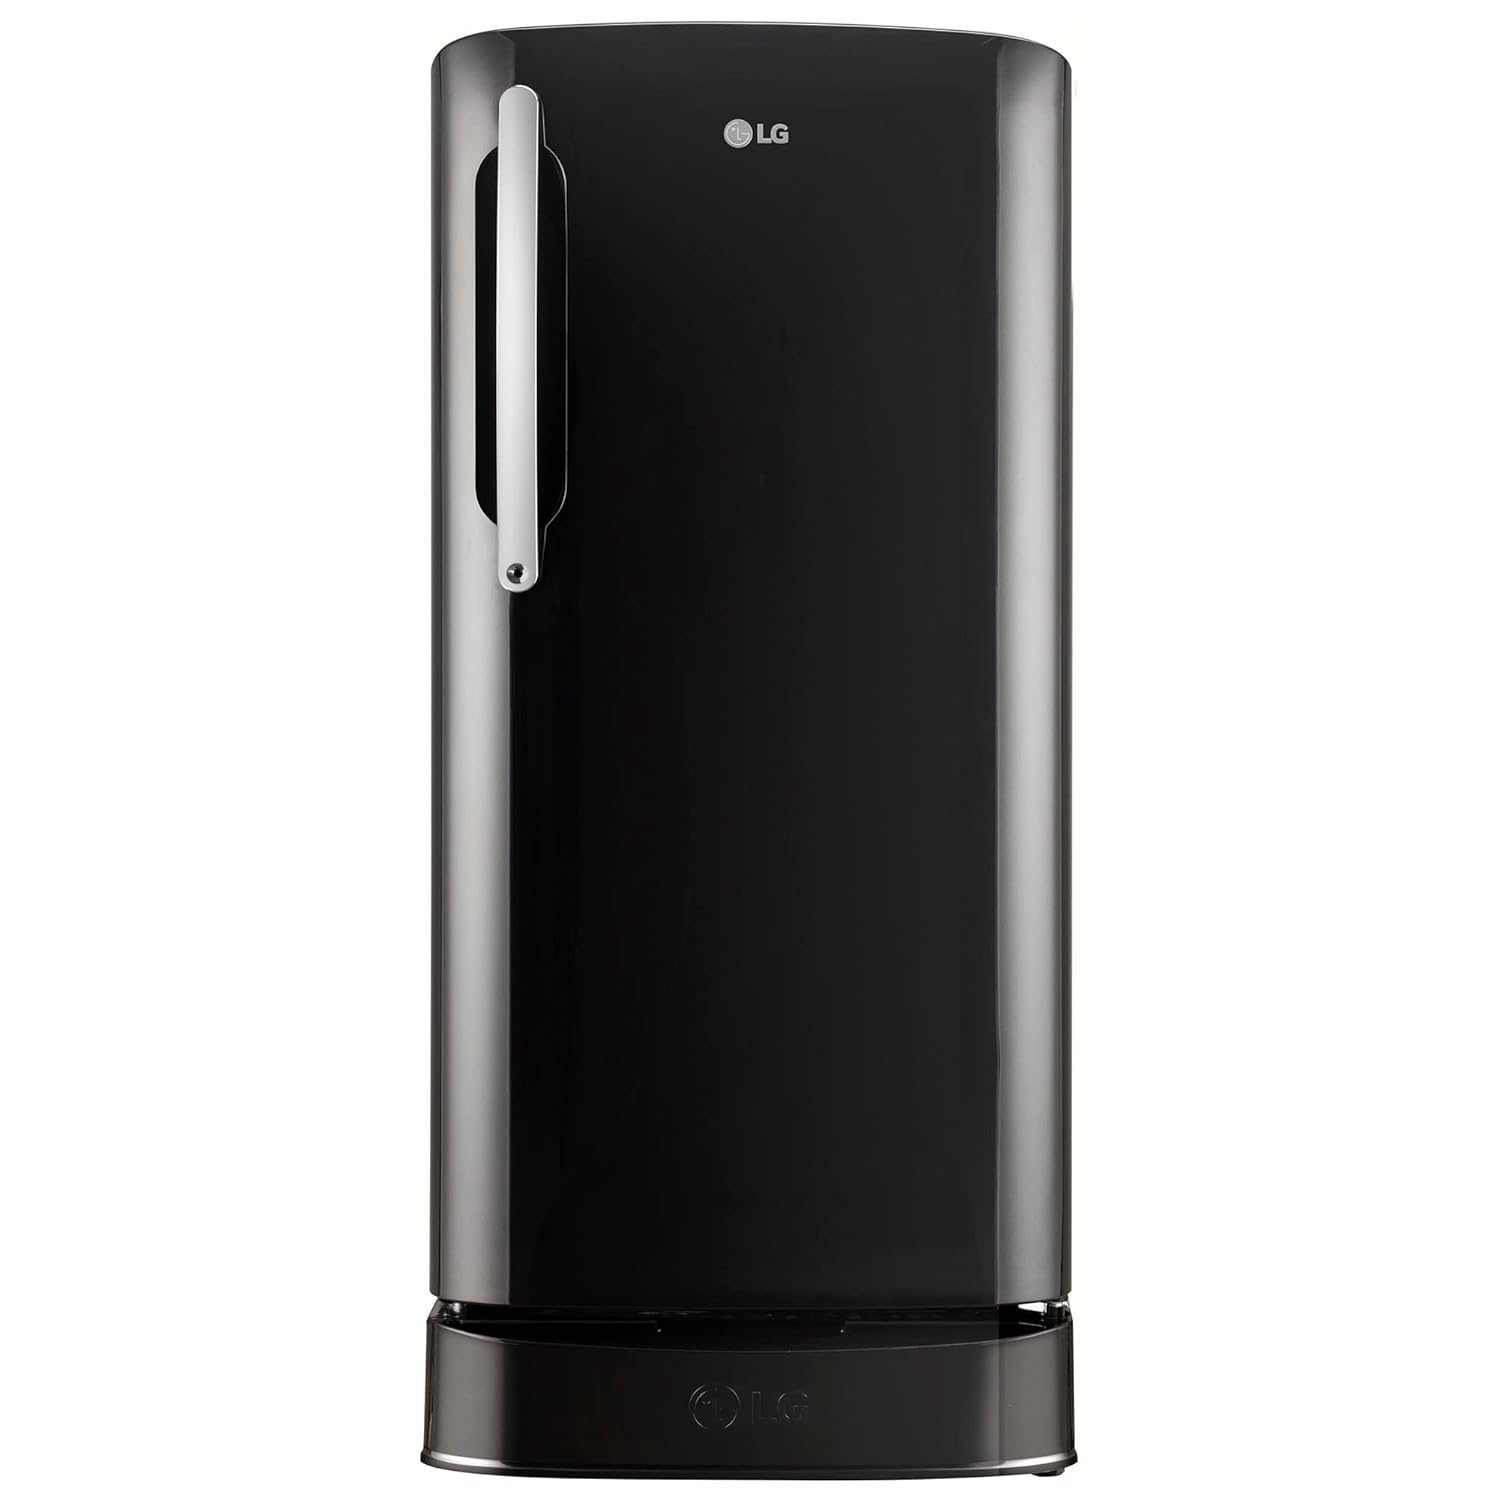 LG GL-D211HESZ 201 L 5 Star Direct-Cool Inverter Single Door Refrigerator Mahajan Electronics Online